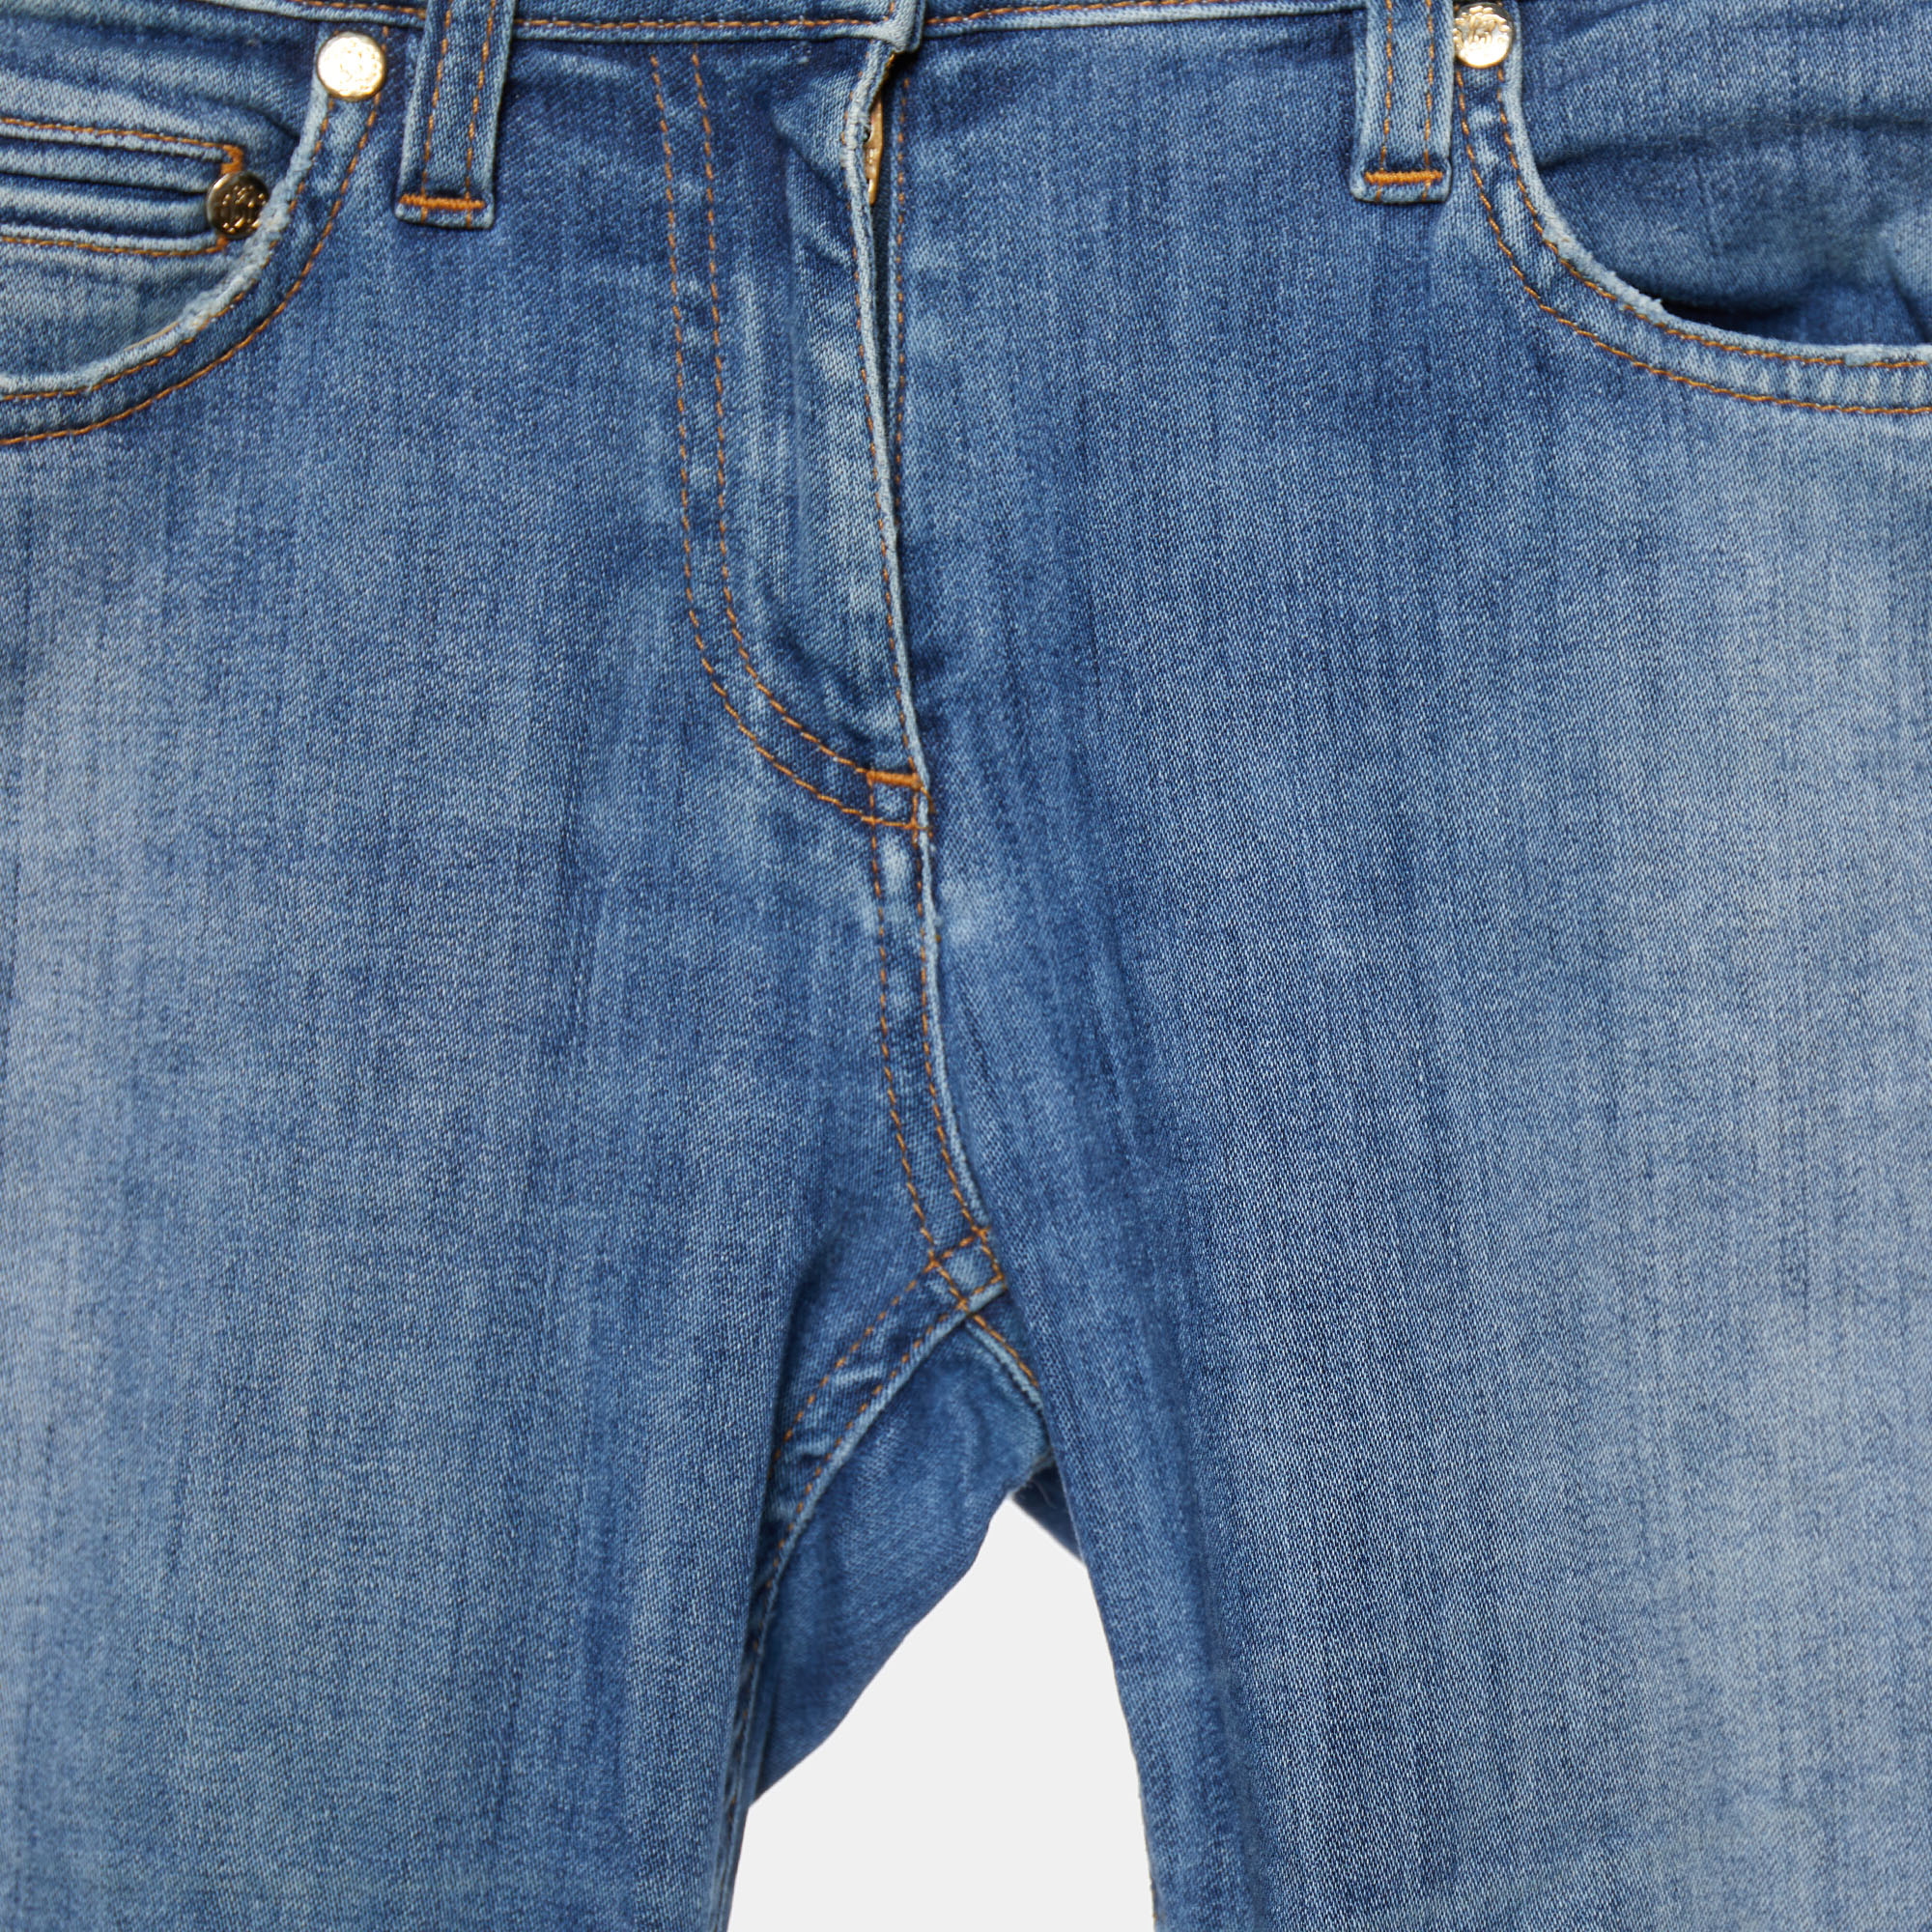 Roberto Cavalli Navy Blue Denim Skinny Jeans S Waist 28